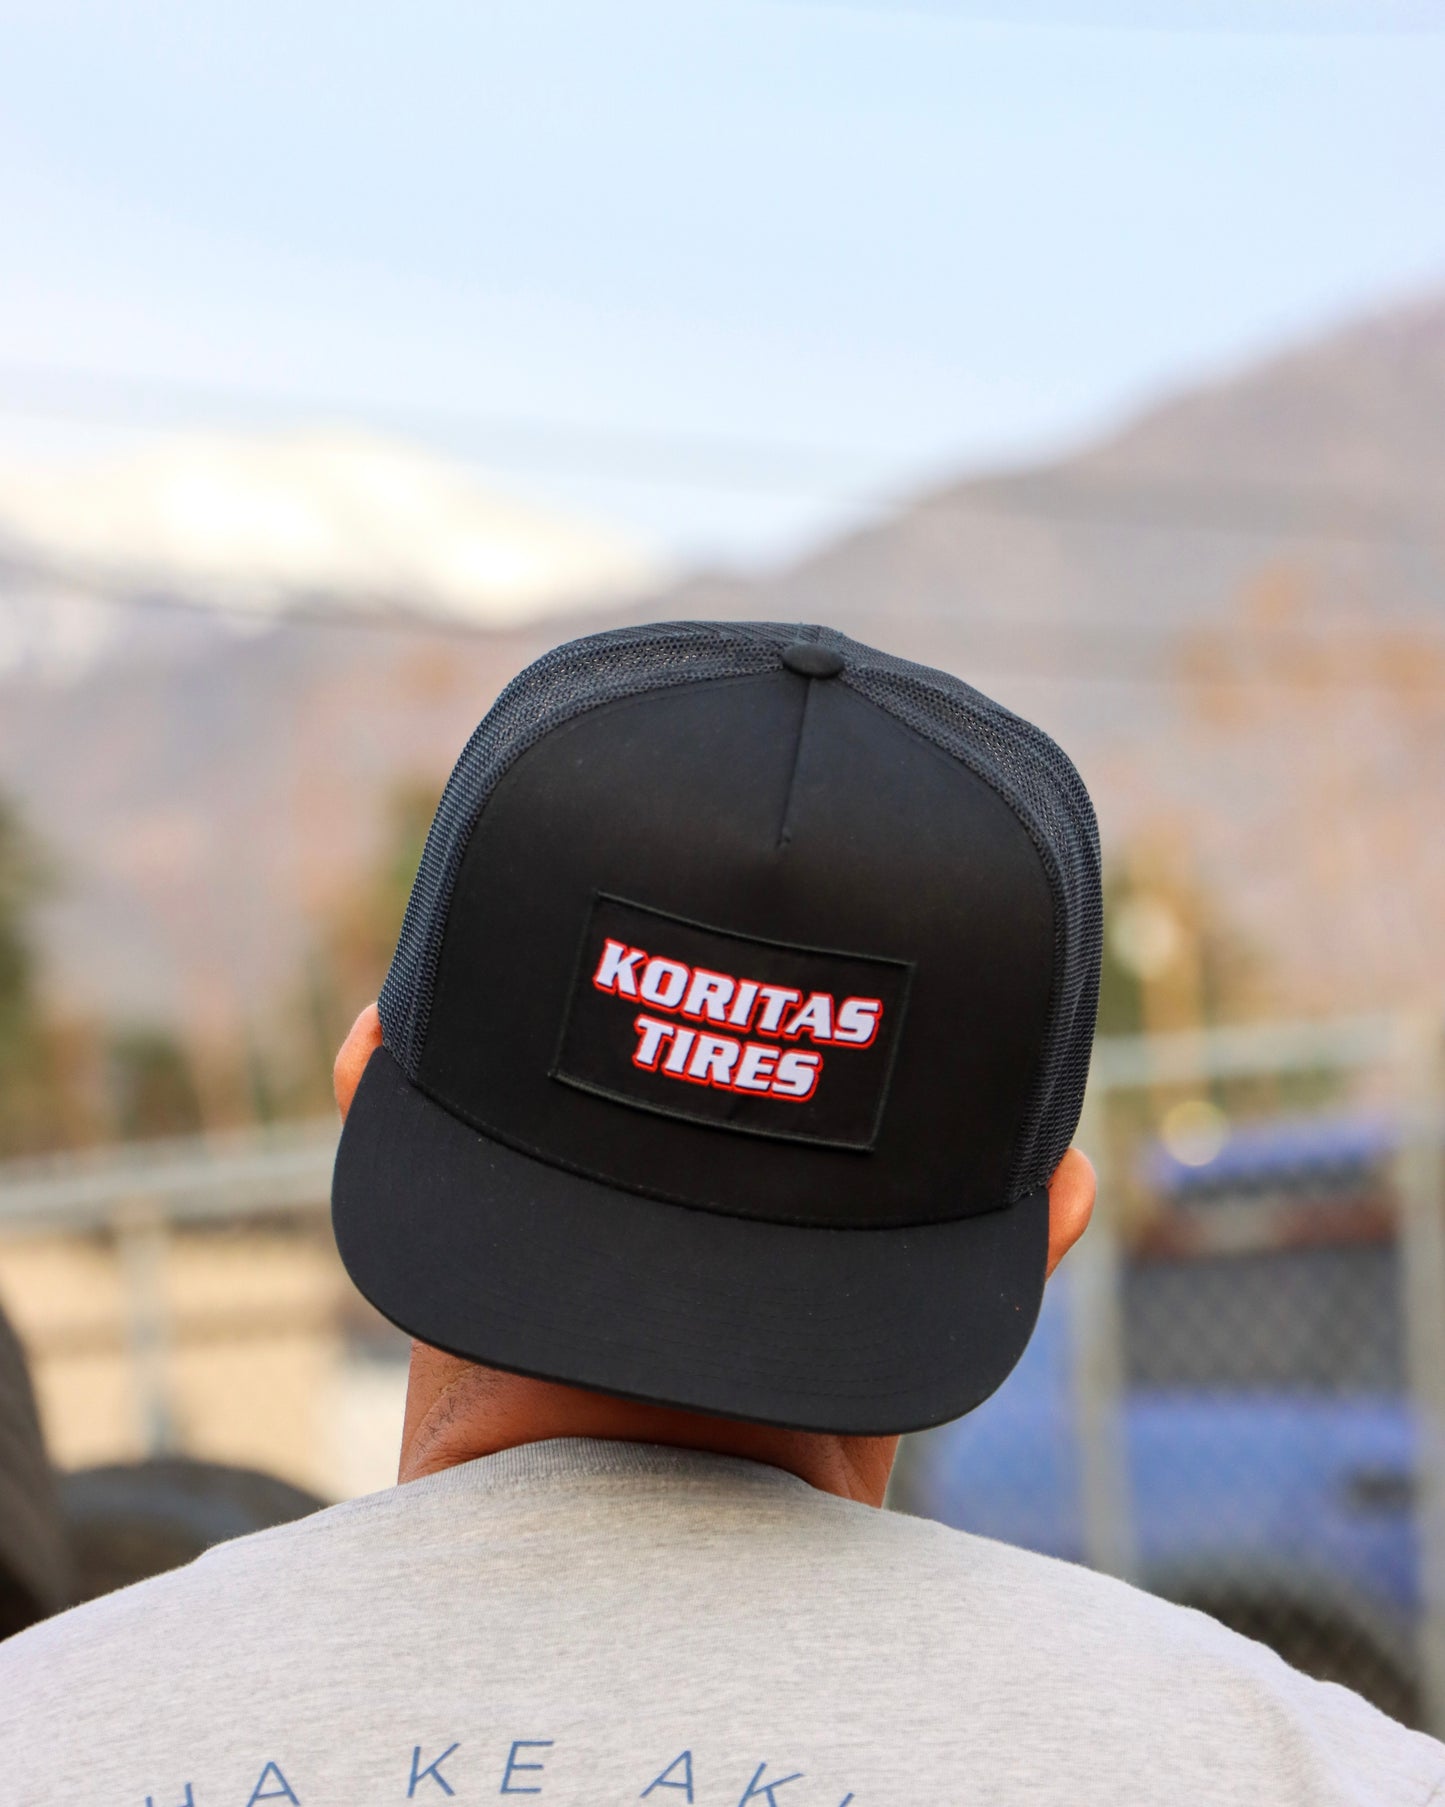 Model with Koritas Tires Trucker hat on backwards